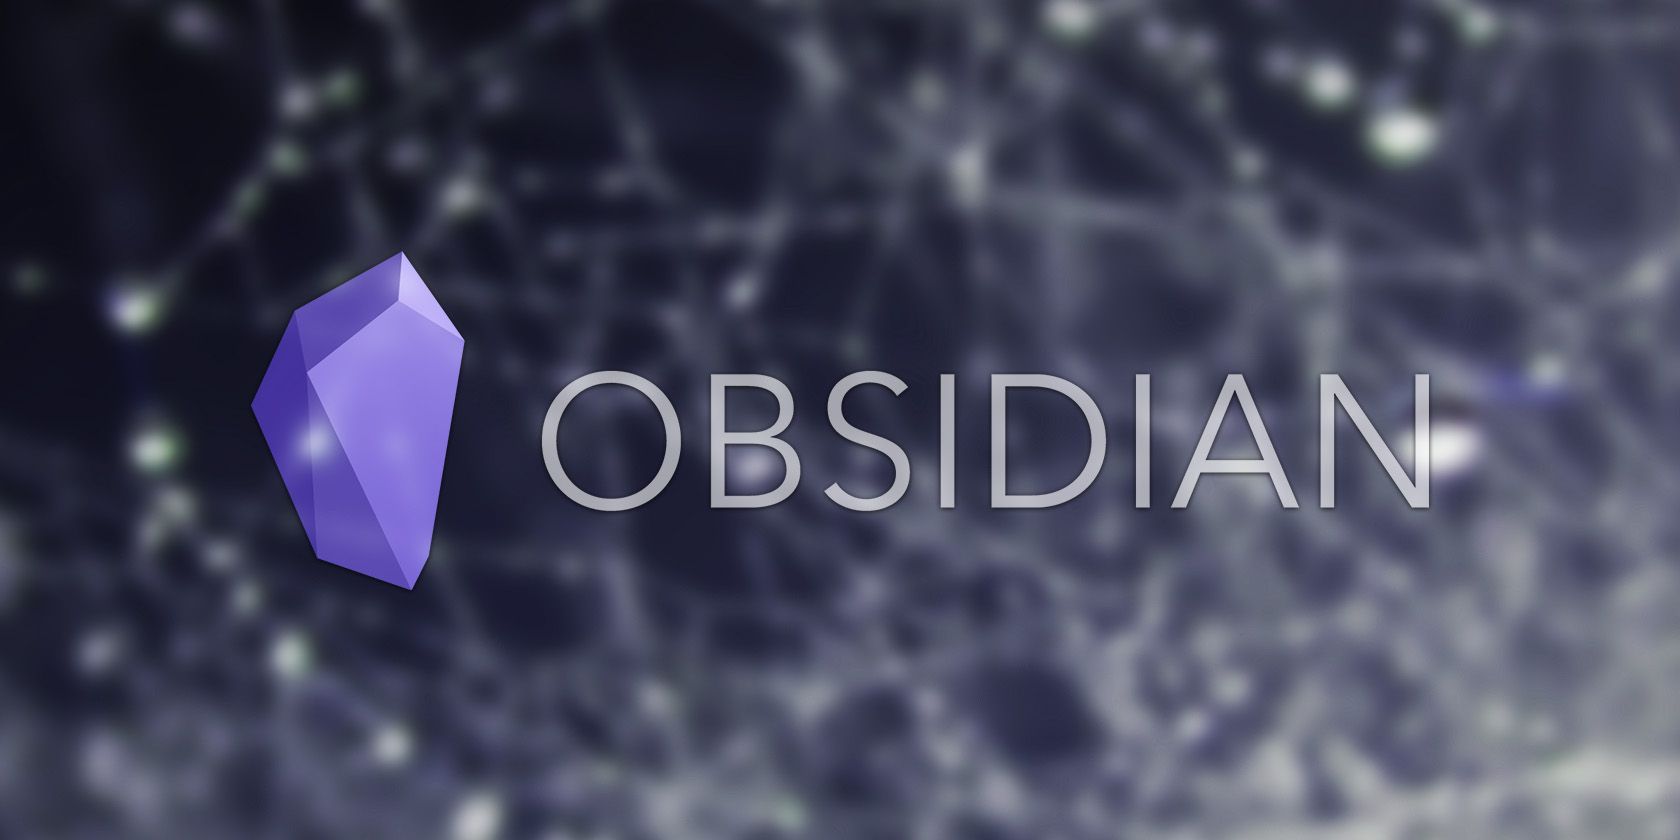 Obsidian logo on a background.